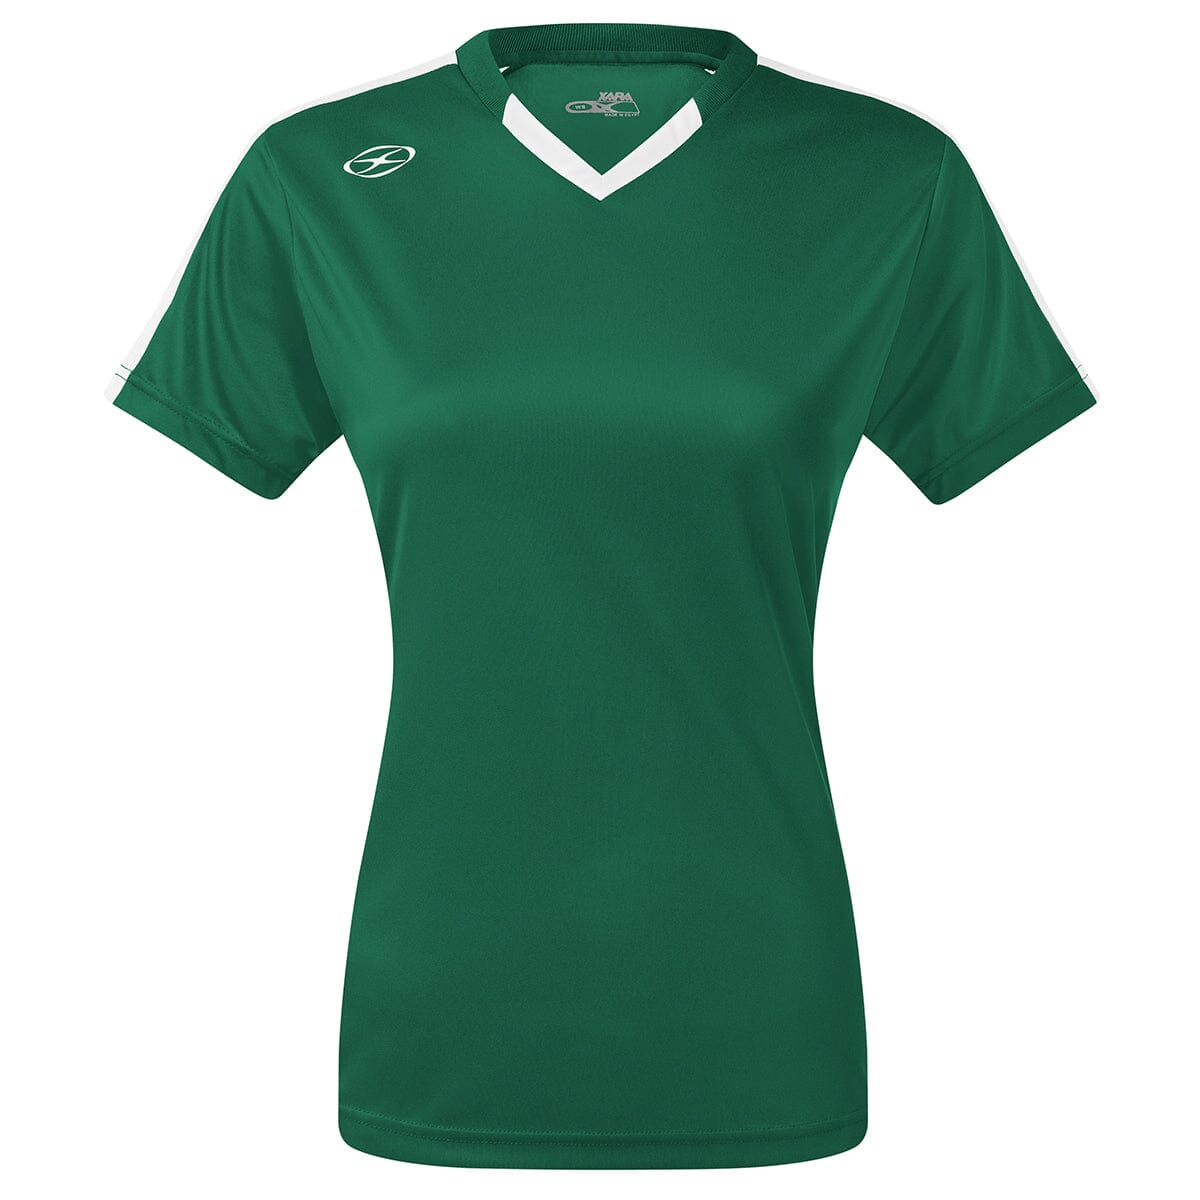 Britannia Jersey - Home Colors - Female Shirt Xara Soccer Hunter/White Womens Youth Medium 